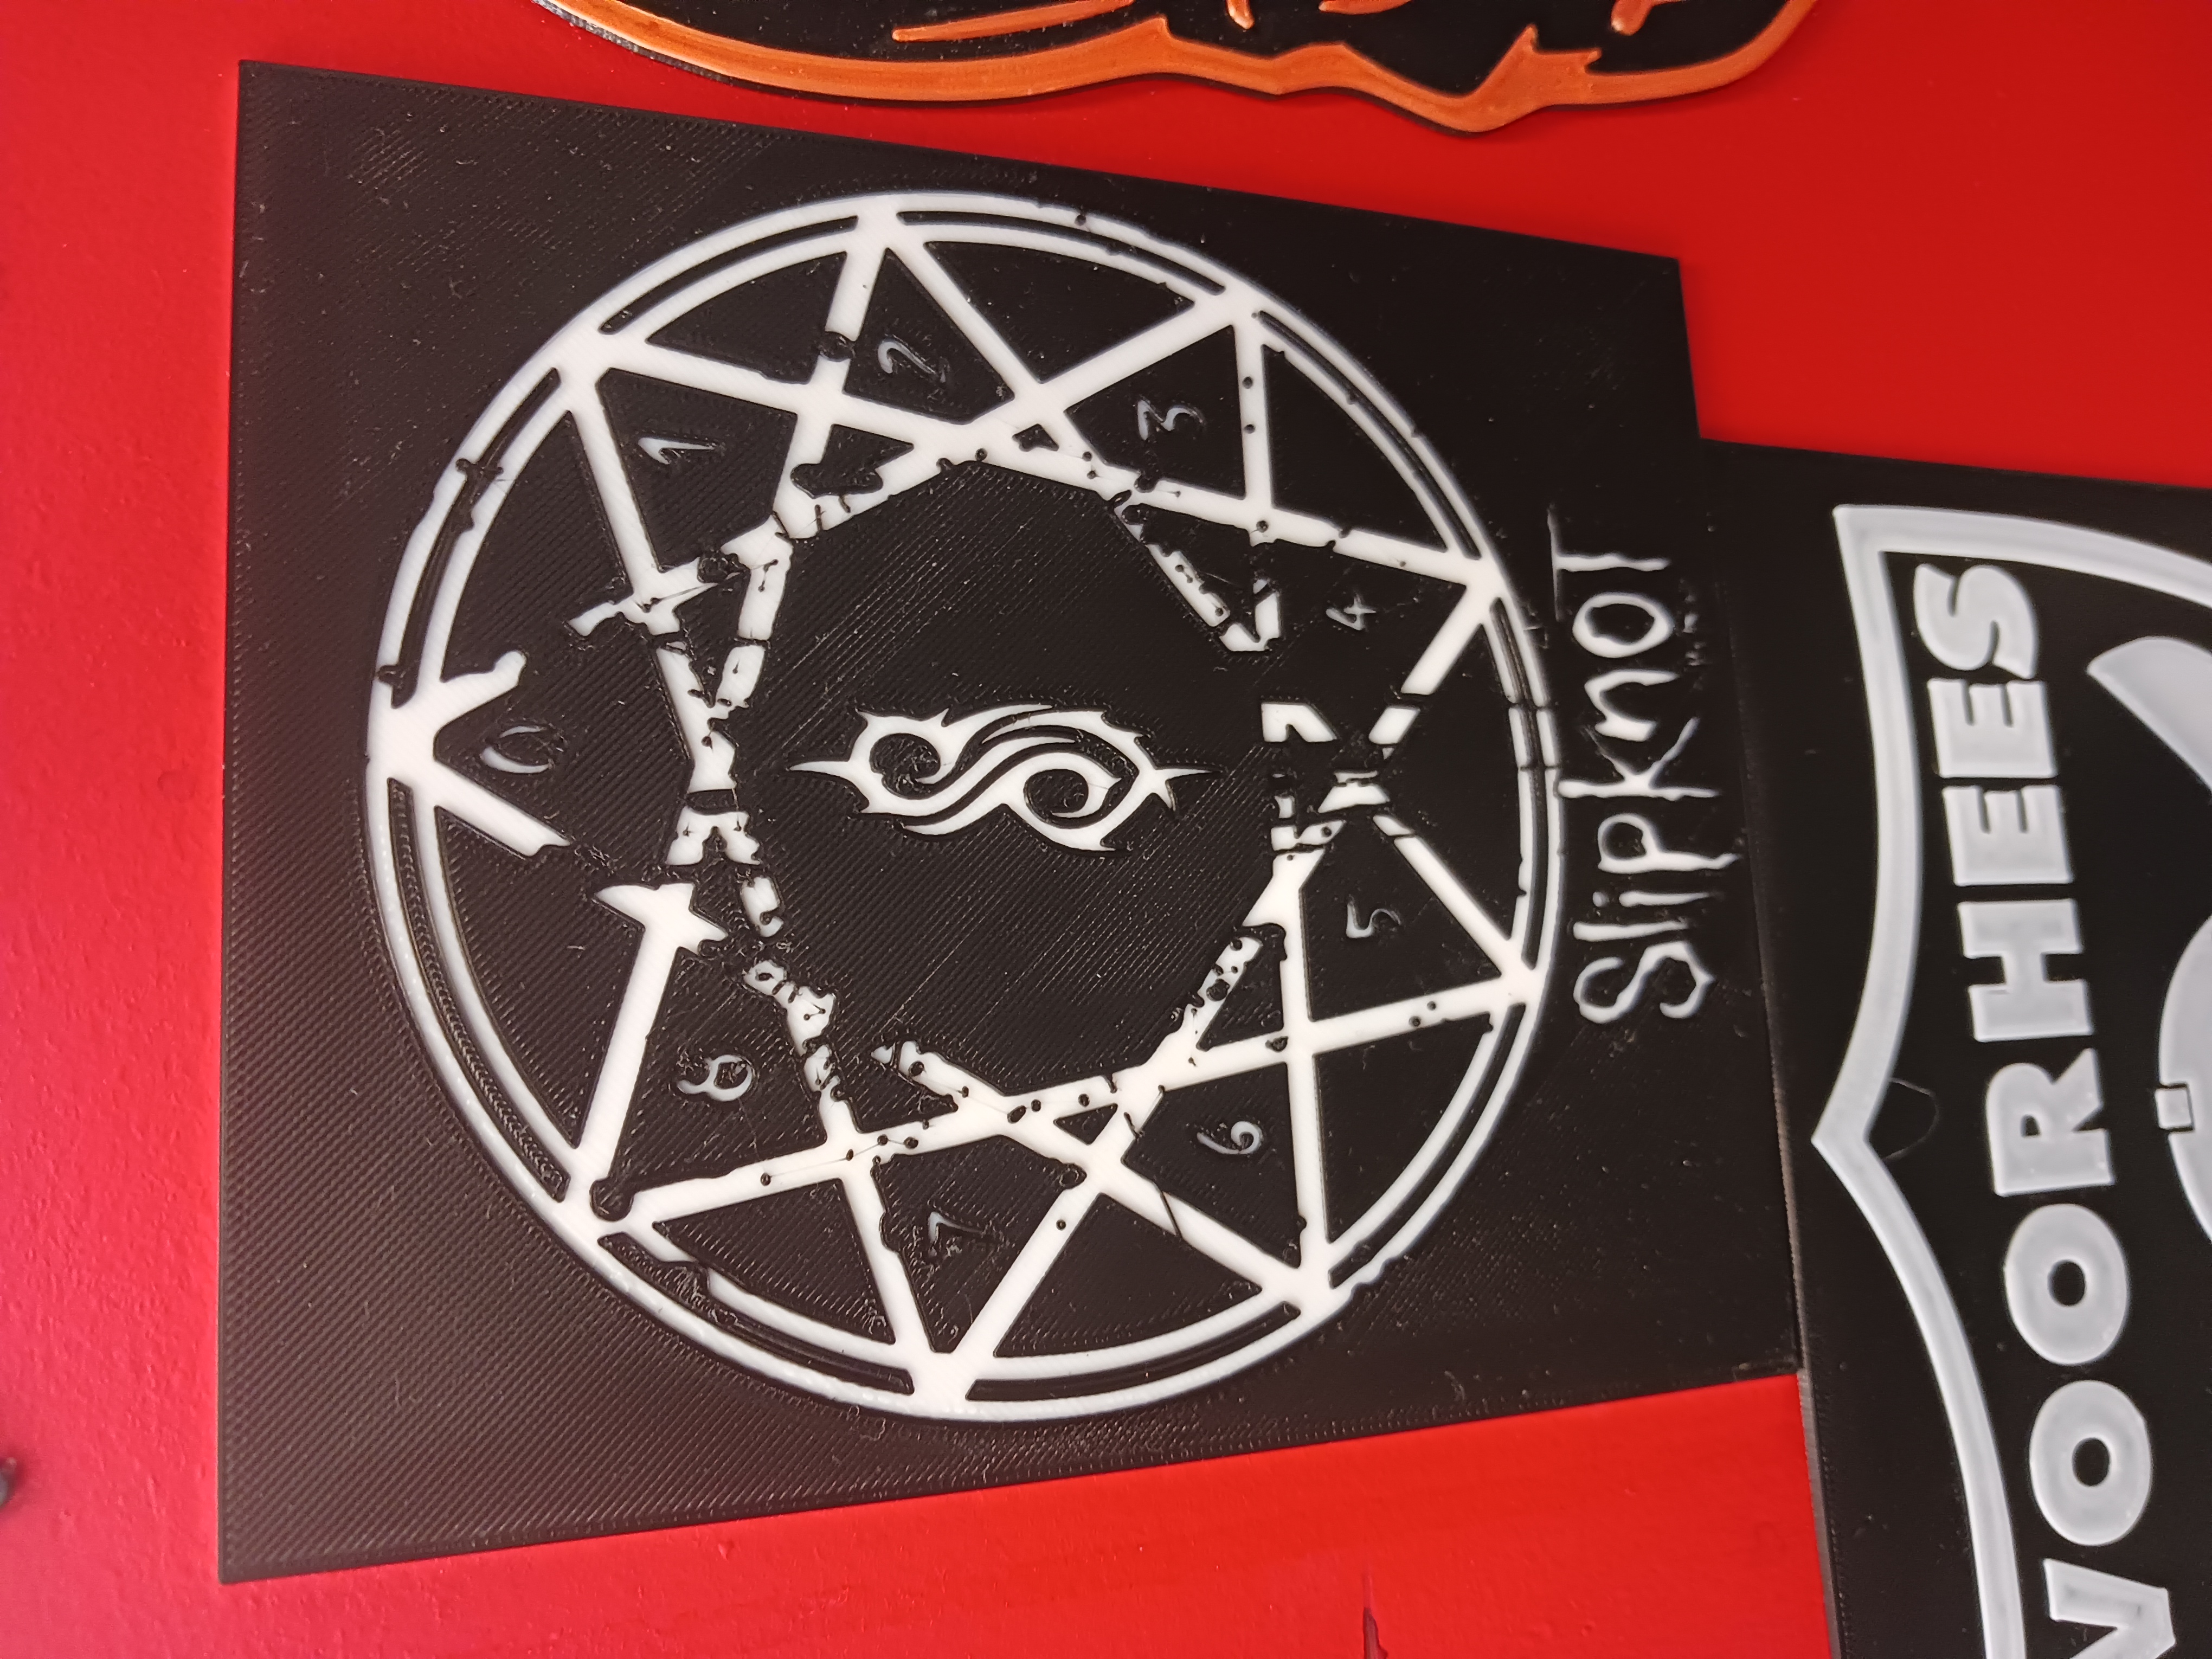 Slipknot Logo 2014 logo, Vector Logo of Slipknot Logo 2014 brand free  download (eps, ai, png, cdr) formats